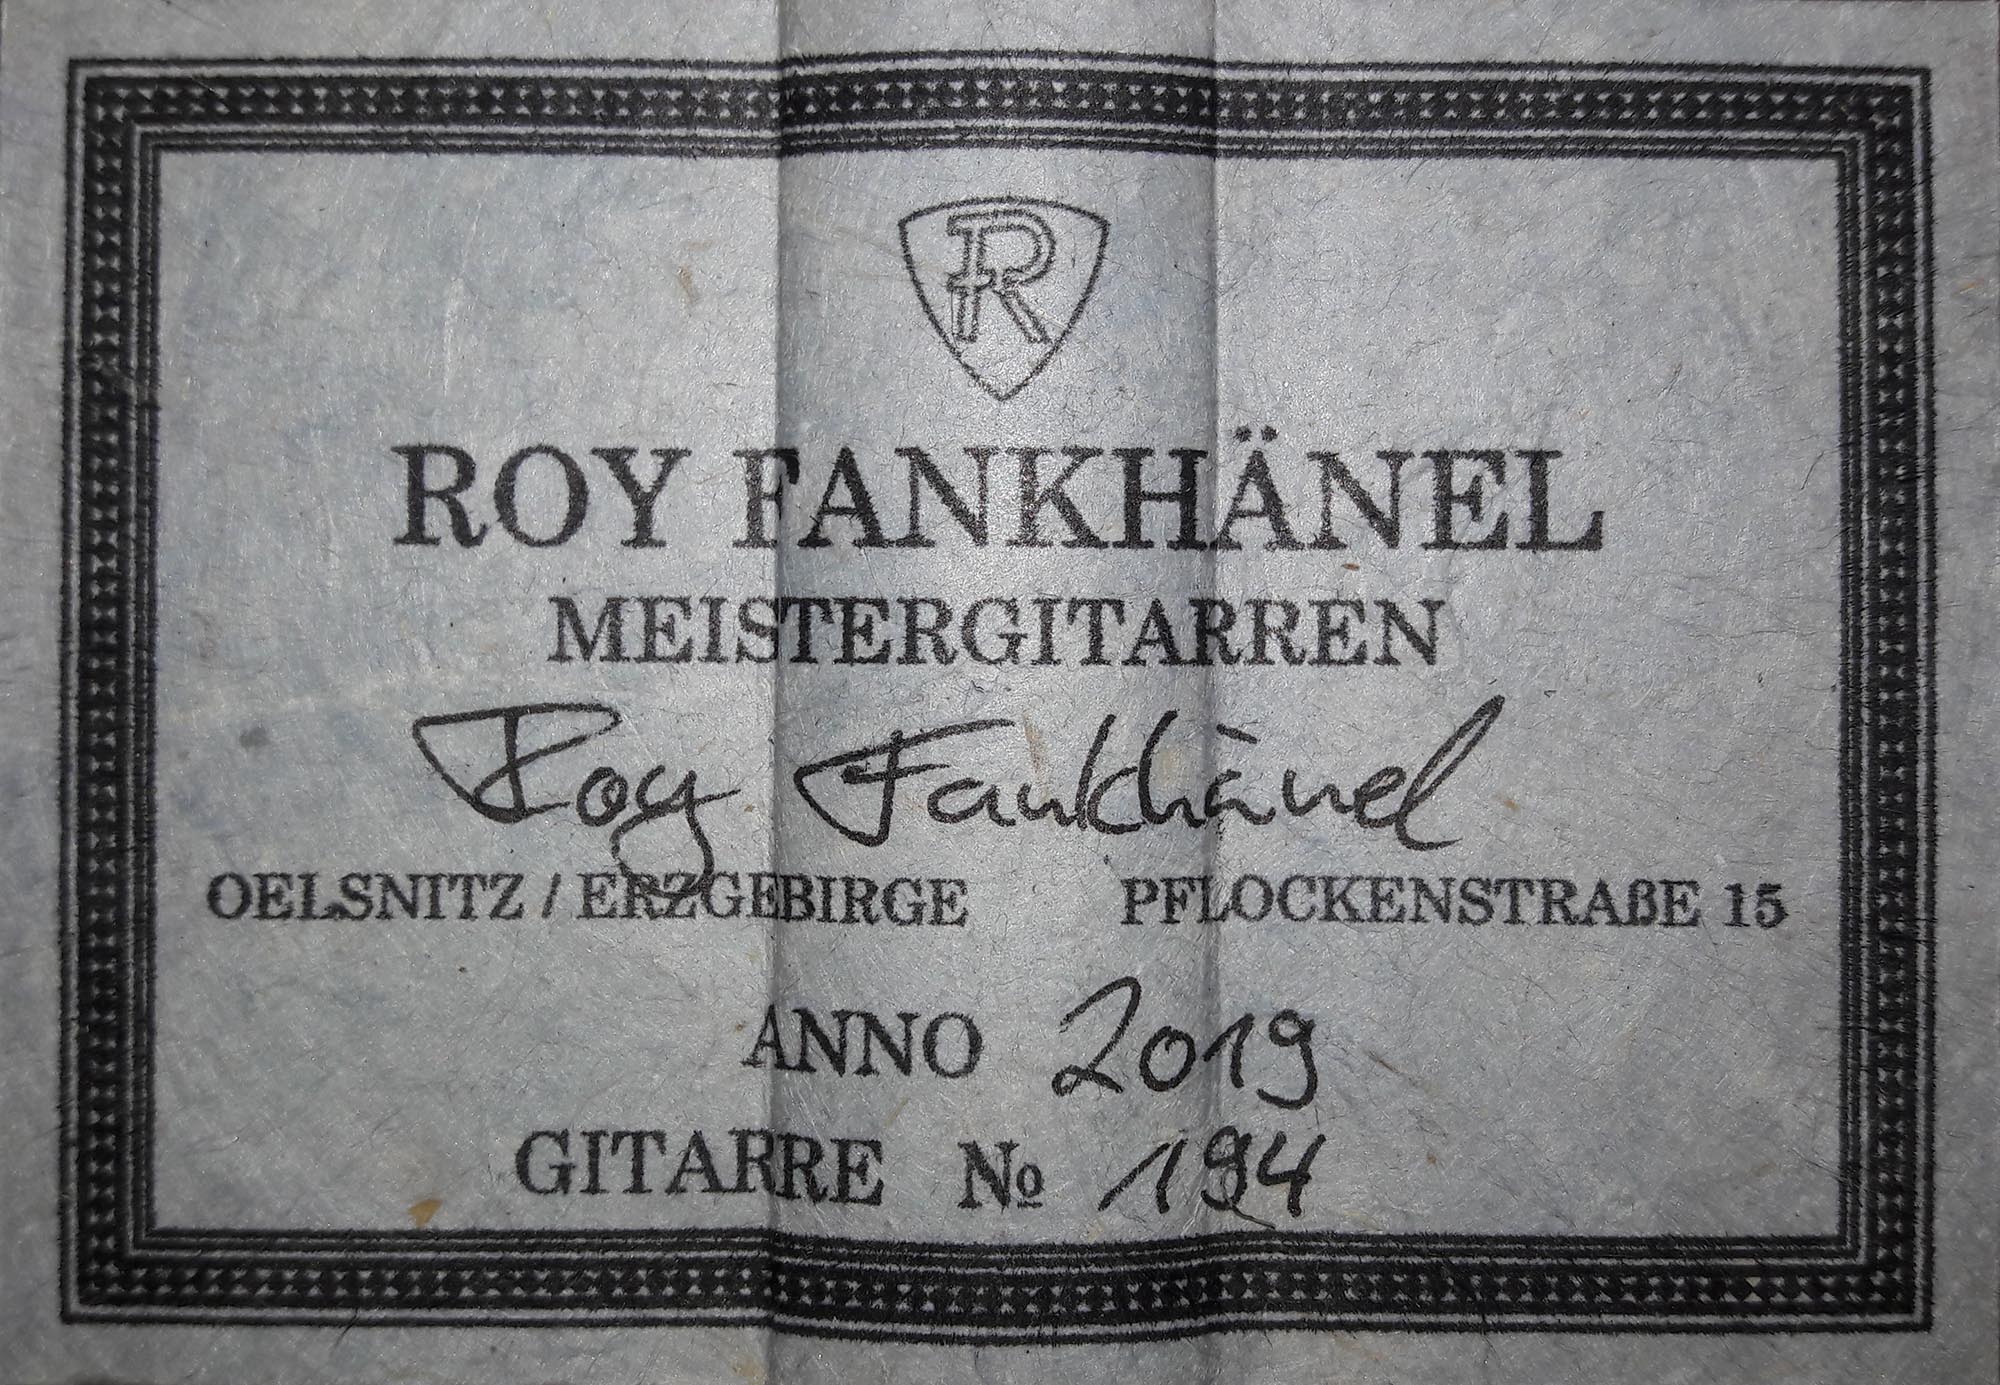 a royfankhänel RF194 18012019 label